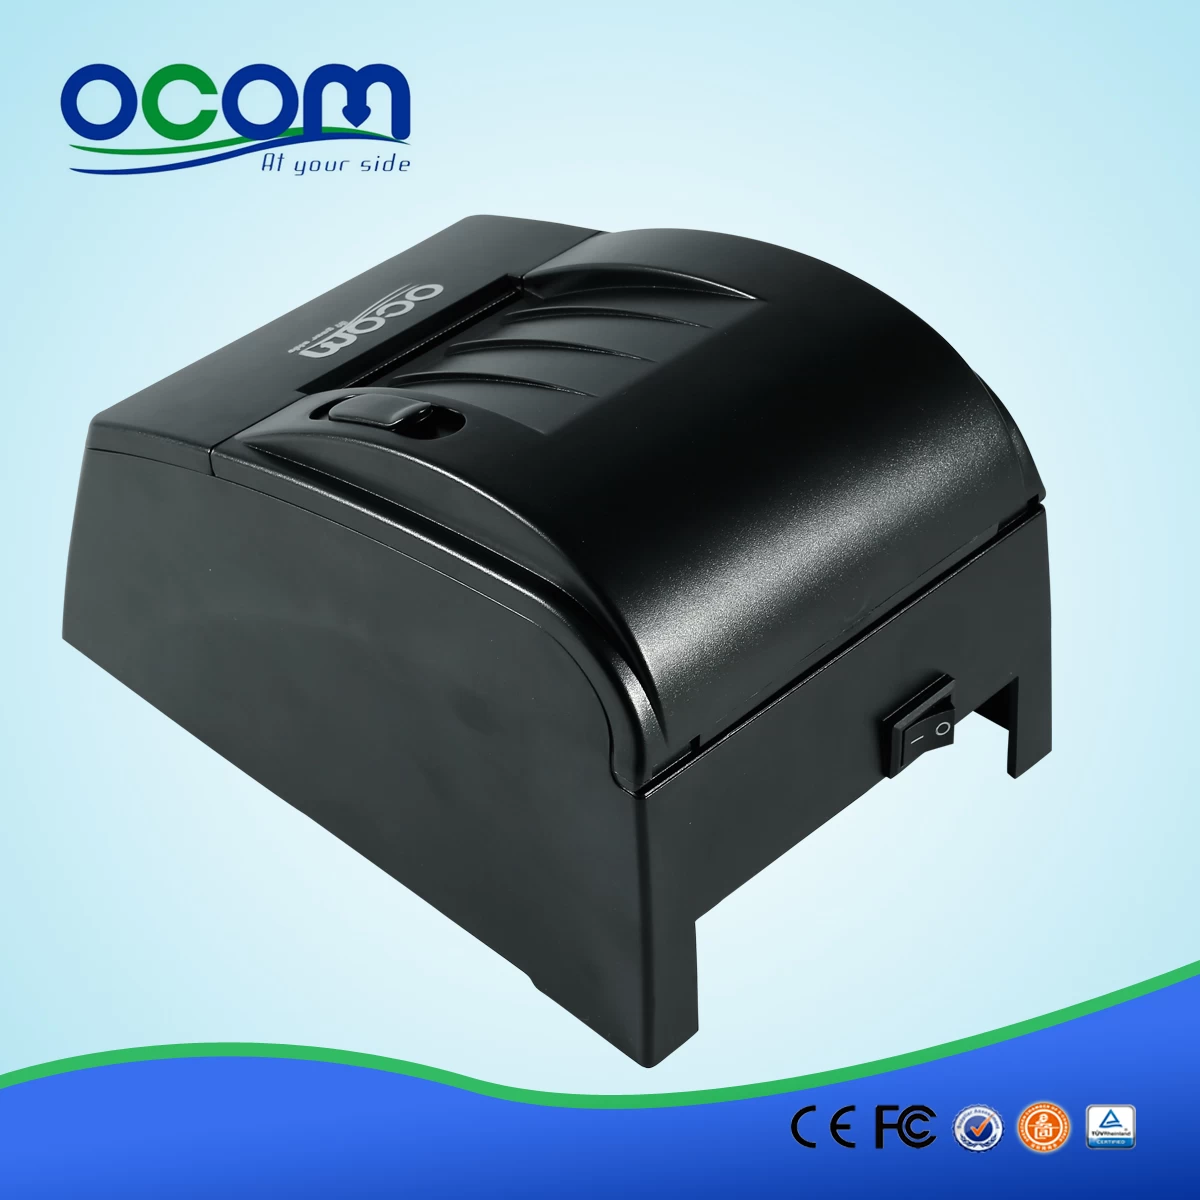 2 inch Pos Thermal Receipt Printer OCPP-585